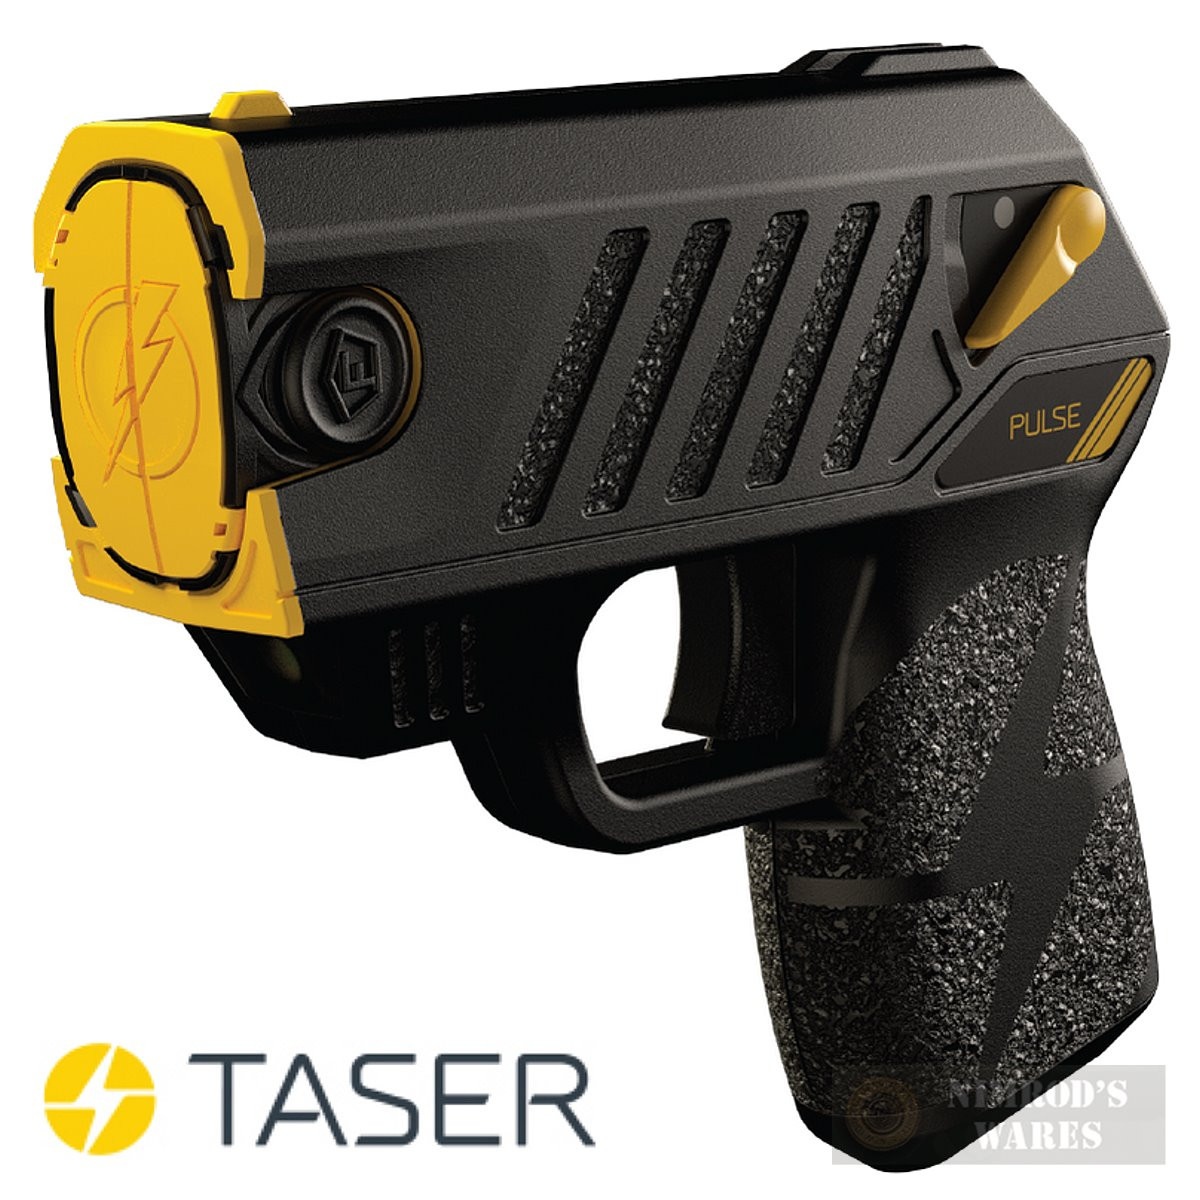 Taser PULSE 15ft Range 30 sec. Immobilization + Stun Gun SELF